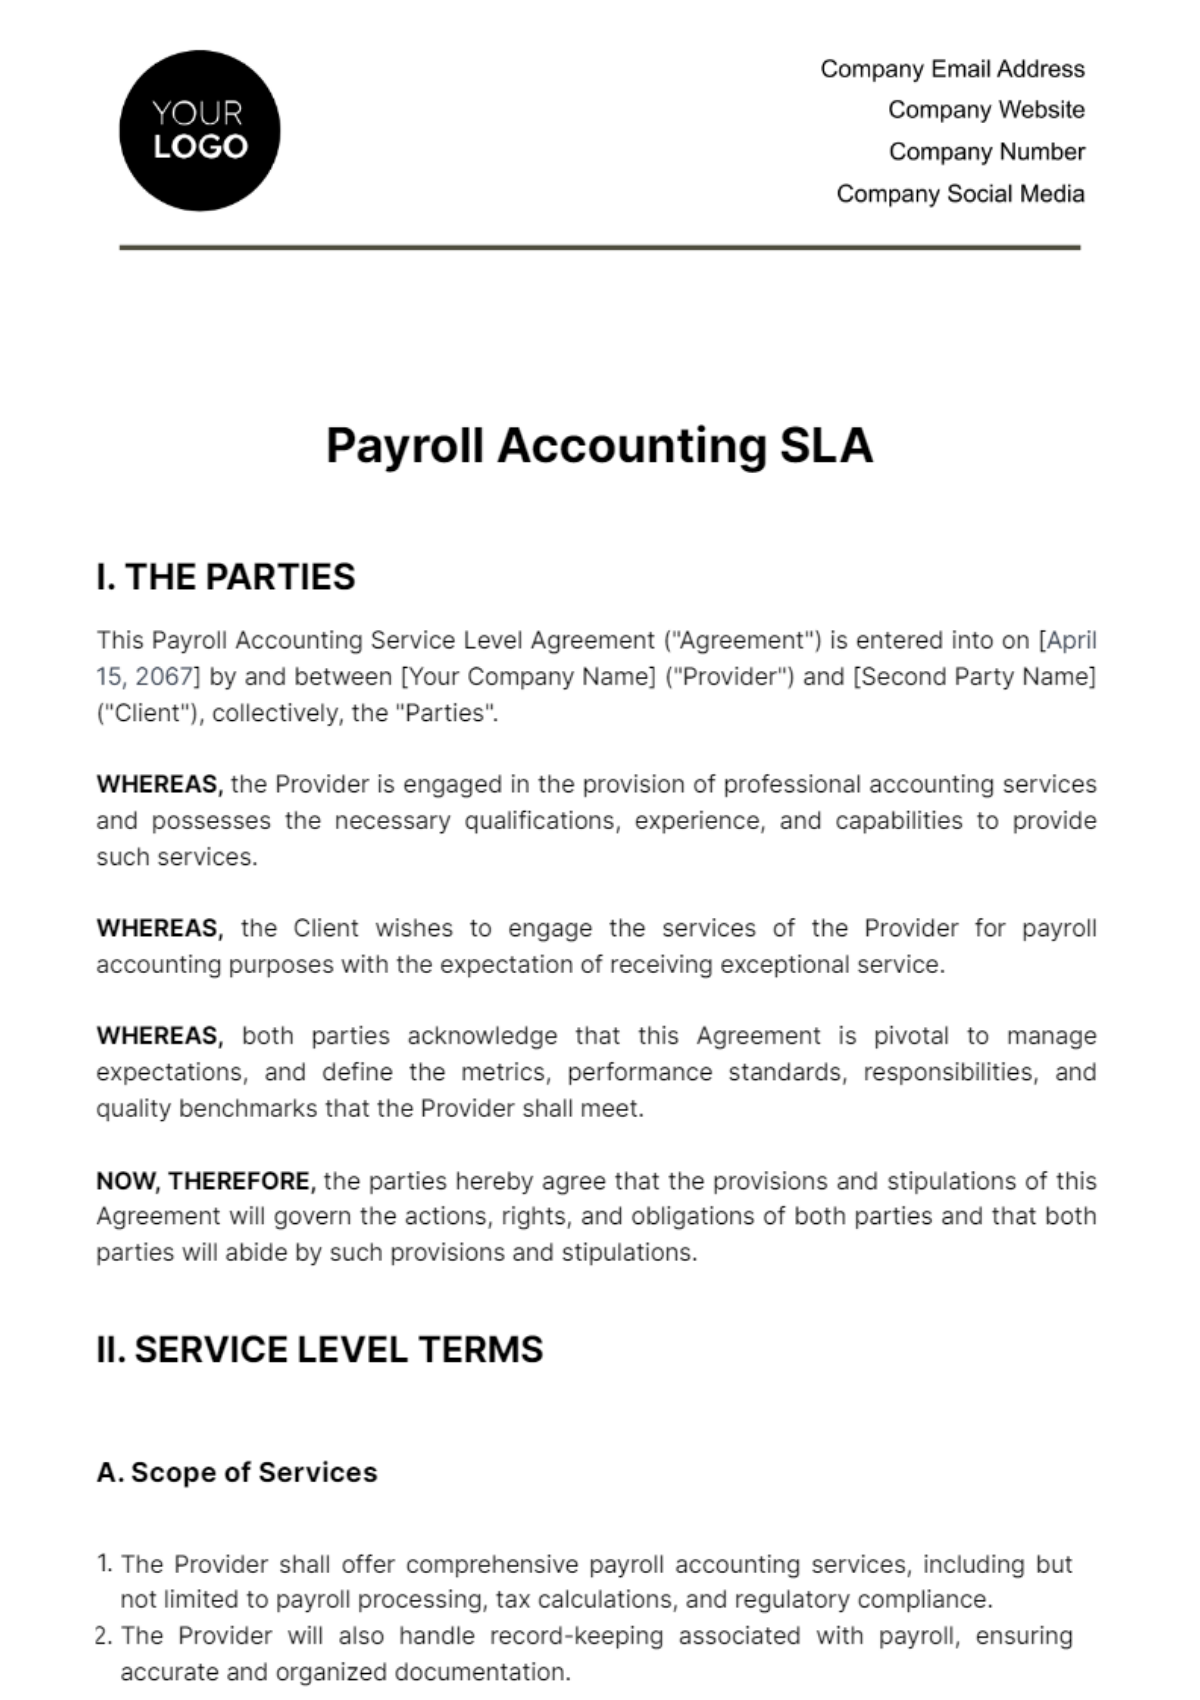 Free Payroll Accounting SLA Template